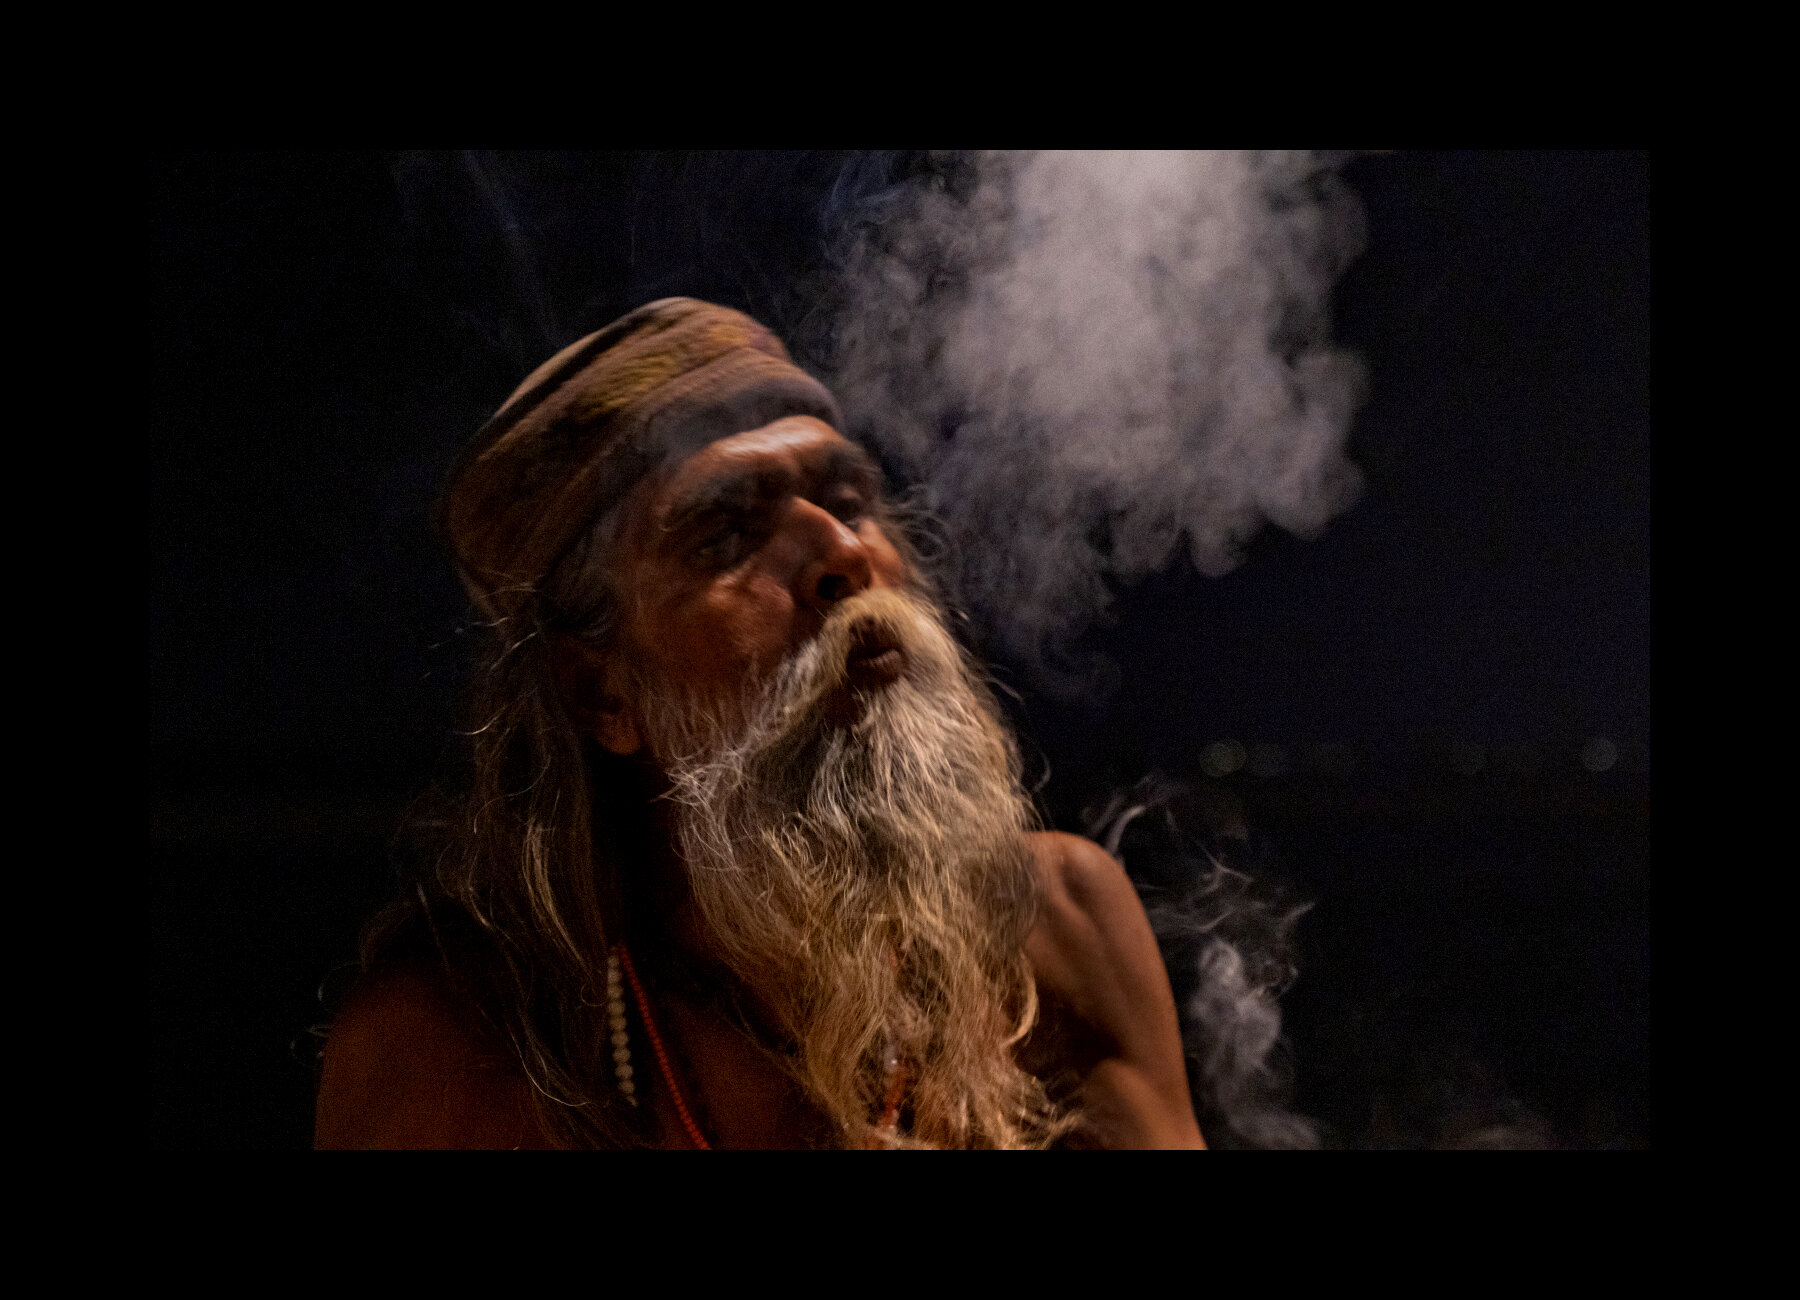  Ashutosh Pandey, a Sadhu, smokes weed on a ghat in Varanasi, India. 2019 